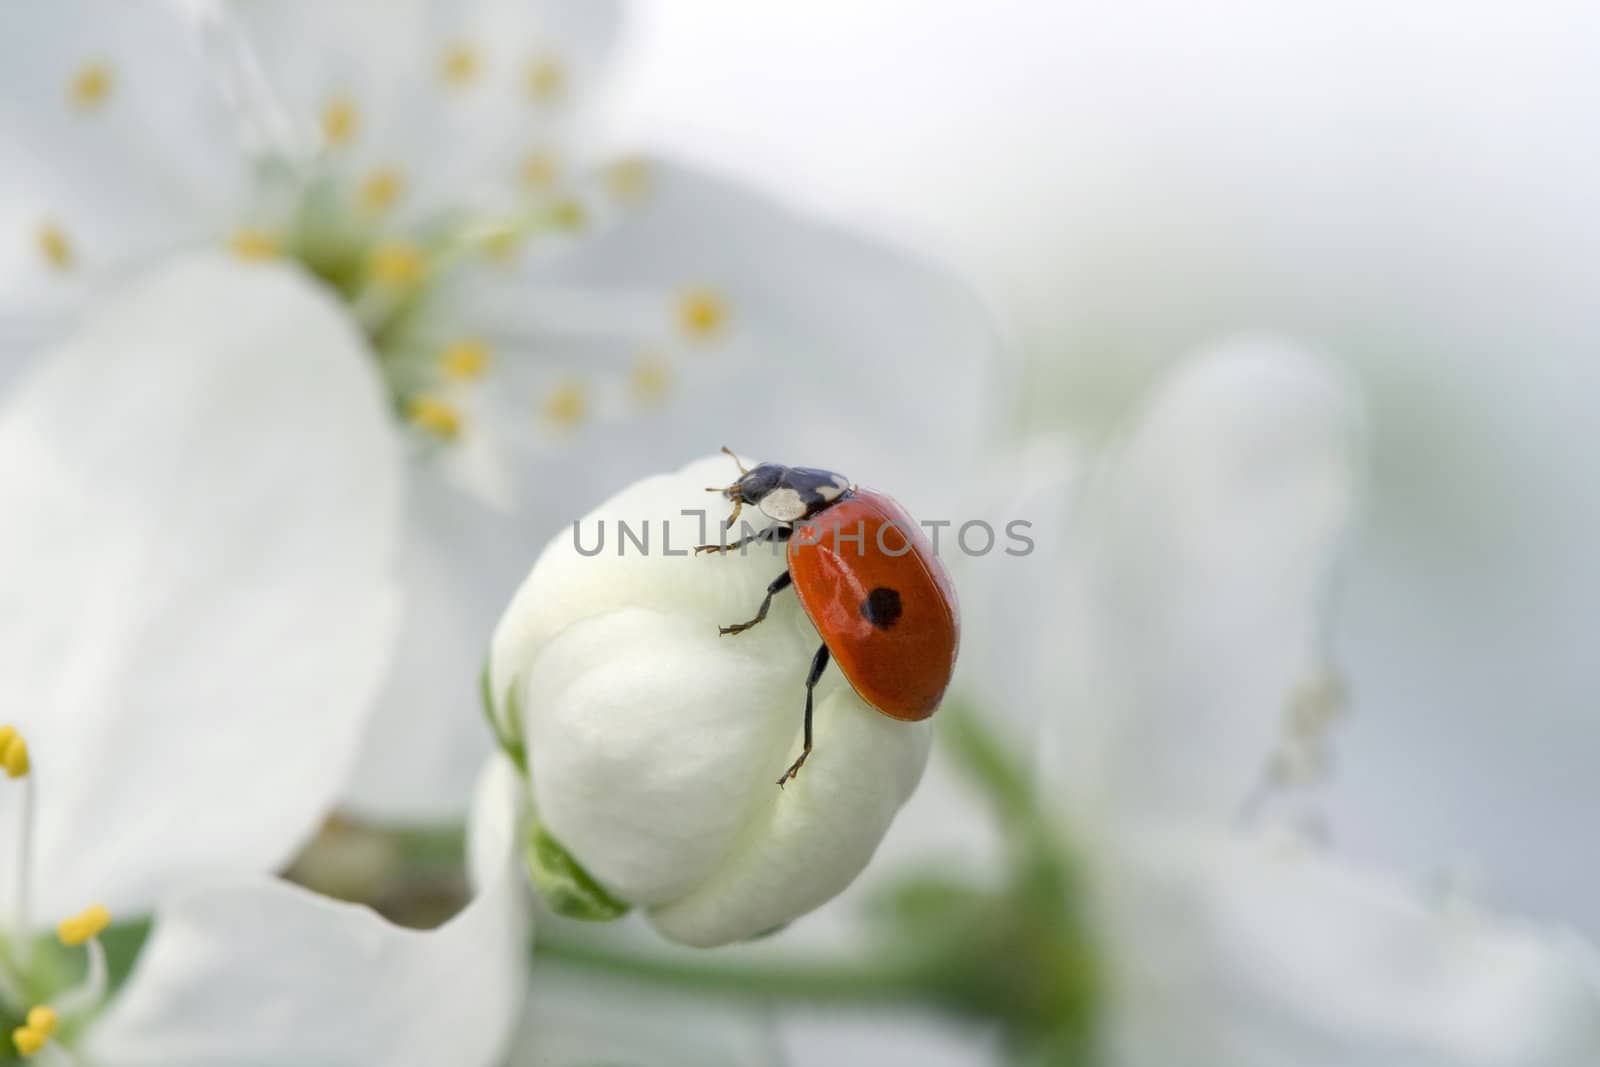 Ladybug on spring flower by Sazonoff